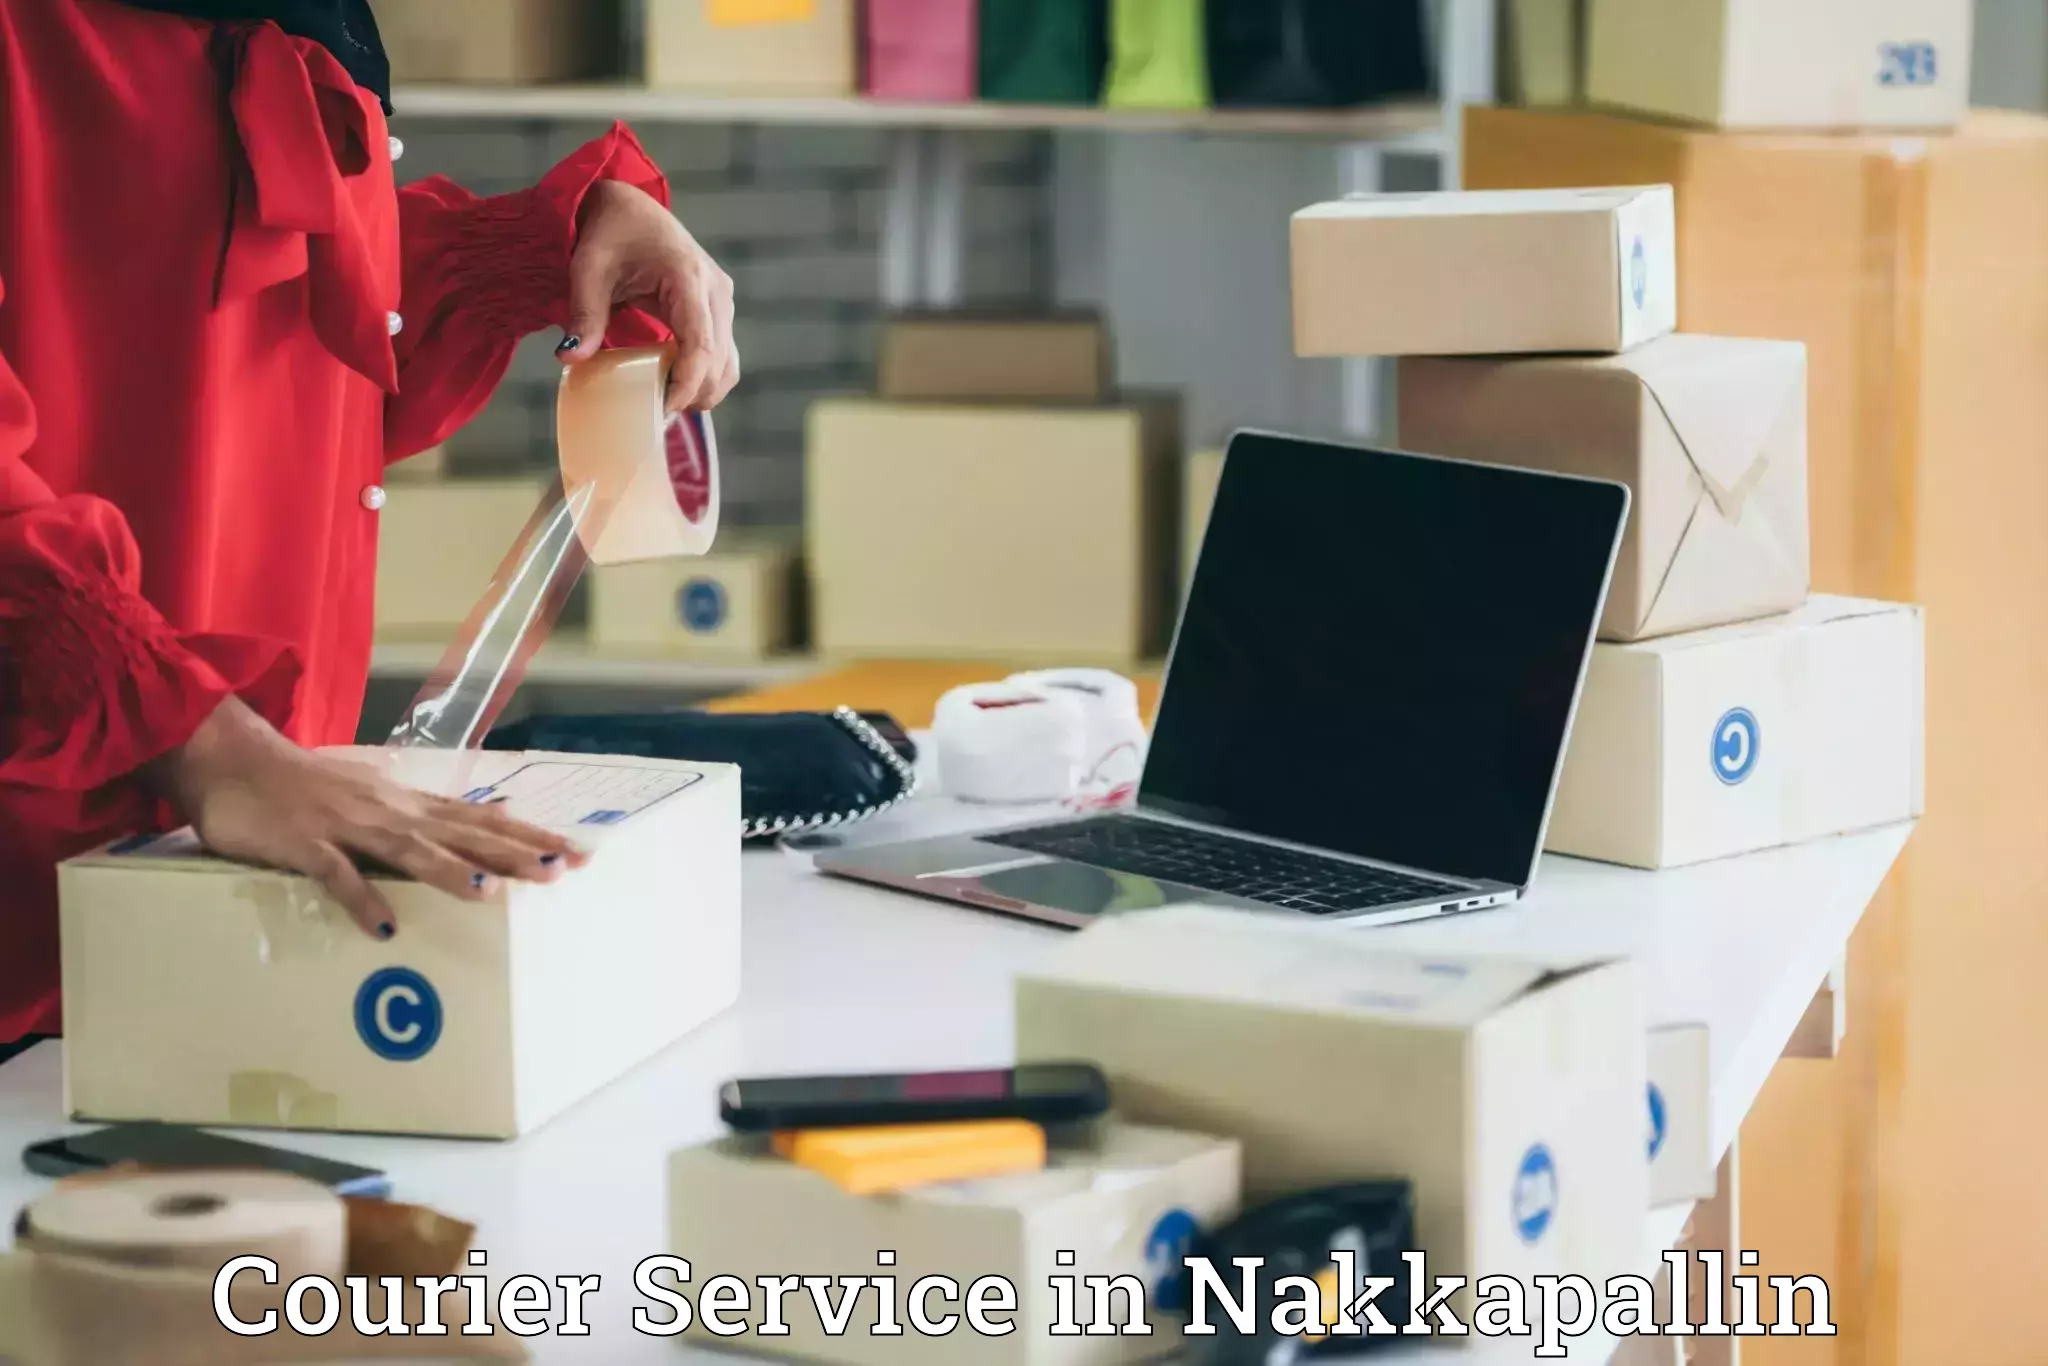 Regular parcel service in Nakkapallin